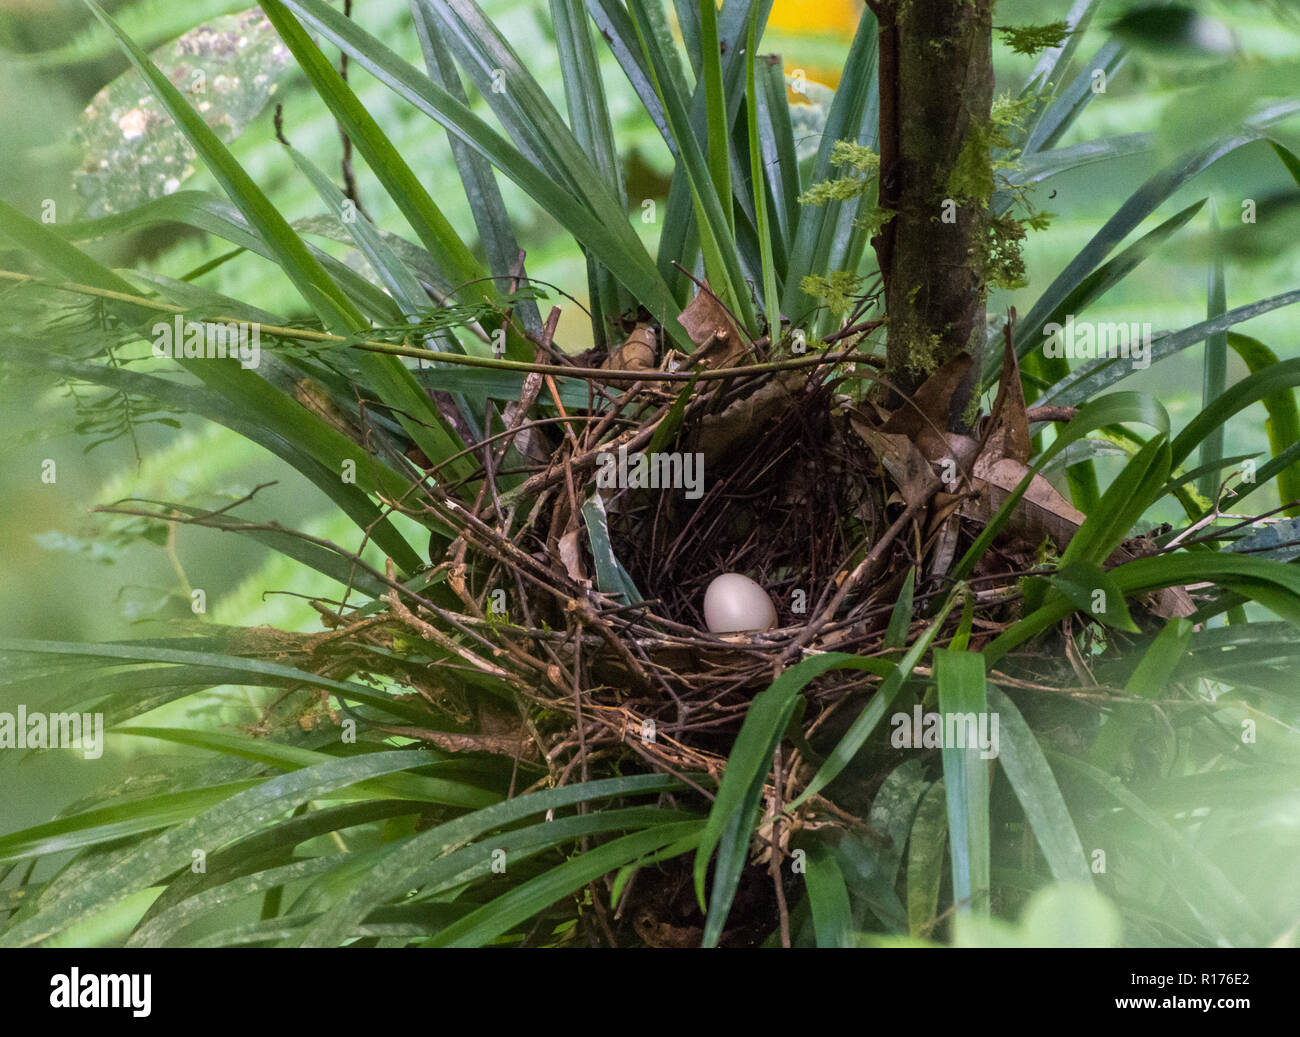 An egg inside the nest of a Vogelkop Bowerbird (Amblyornis inornata). Syoubri, Arfak Mountain, West Papua, Indonesia. Stock Photo